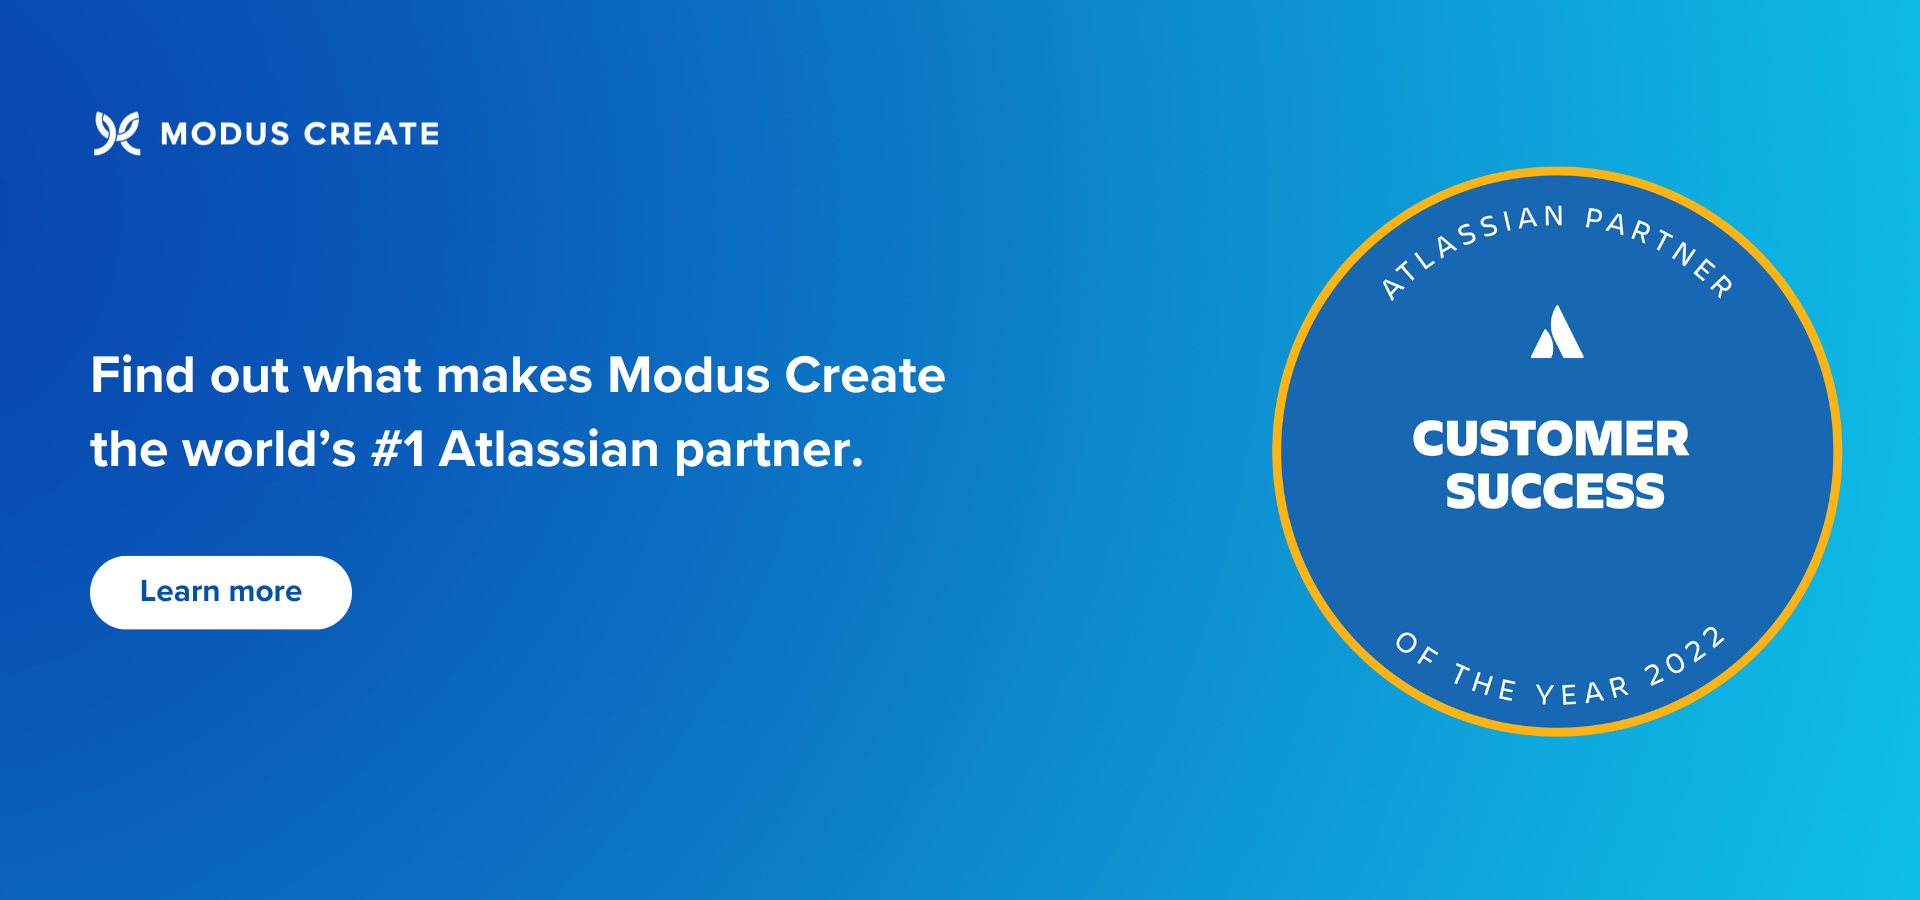 Modus Create Atlassian Customer Success Award